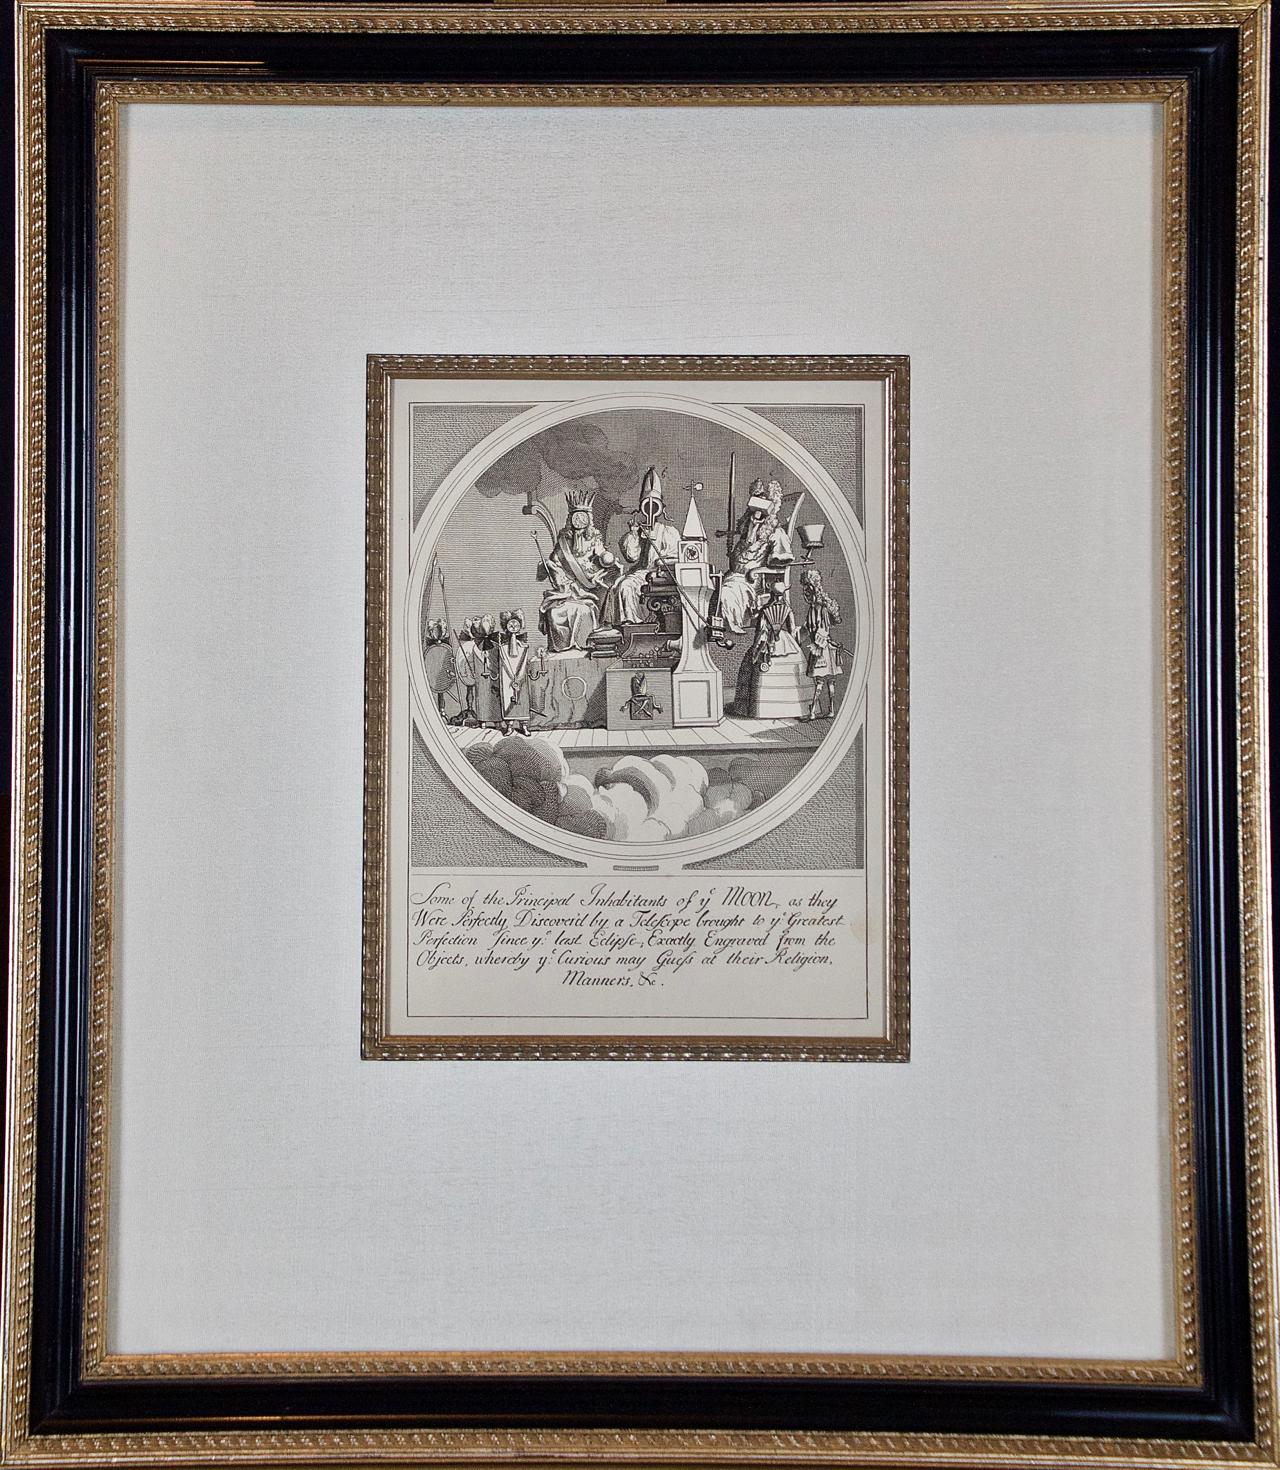 "Principal Inhabitants of the Moon": A Framed 18th Century Satire by Hogarth